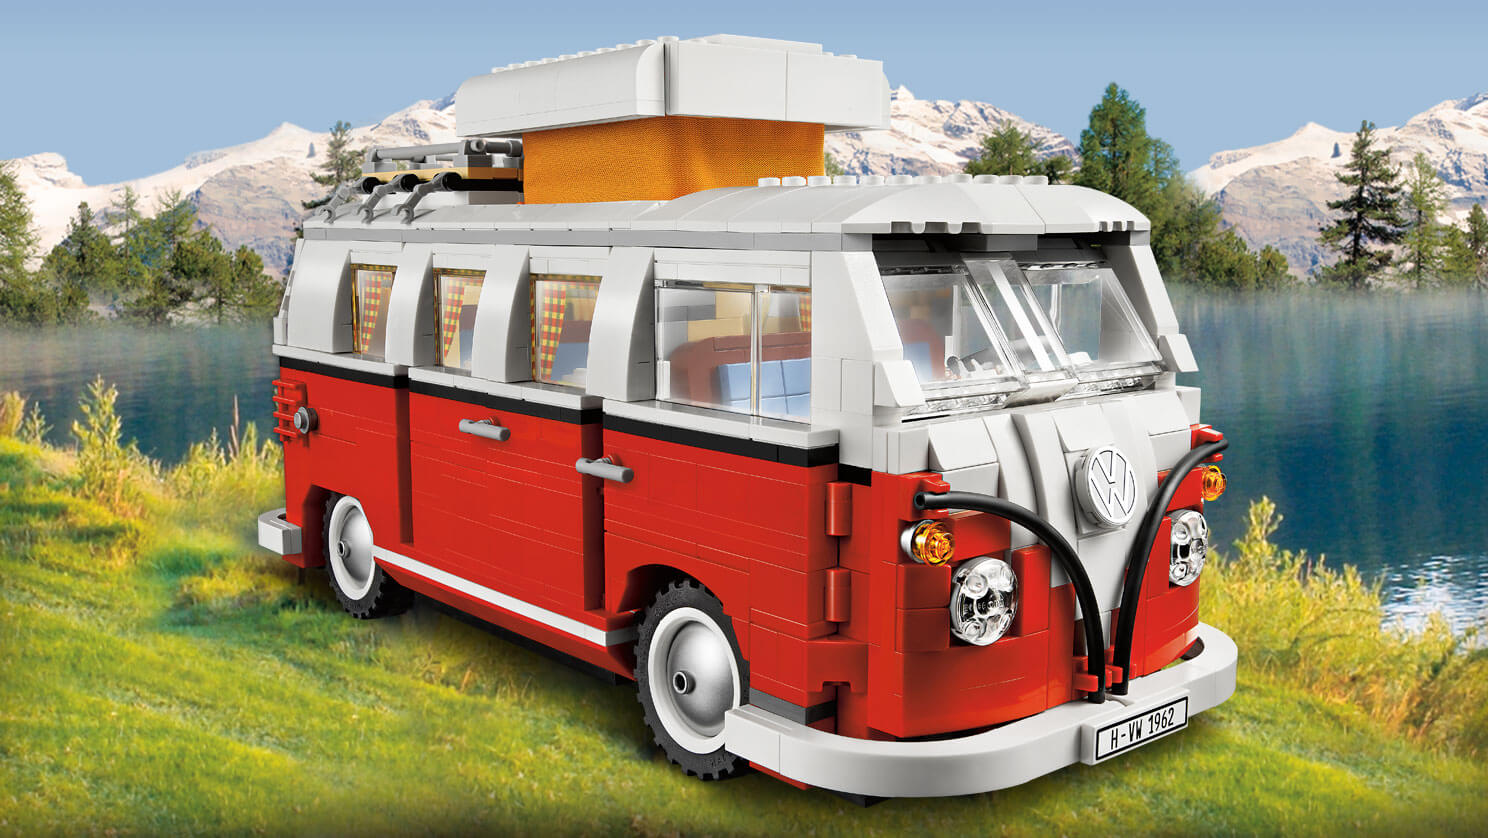 LEGO Creator Le camping-car Volkswagen T1 10220